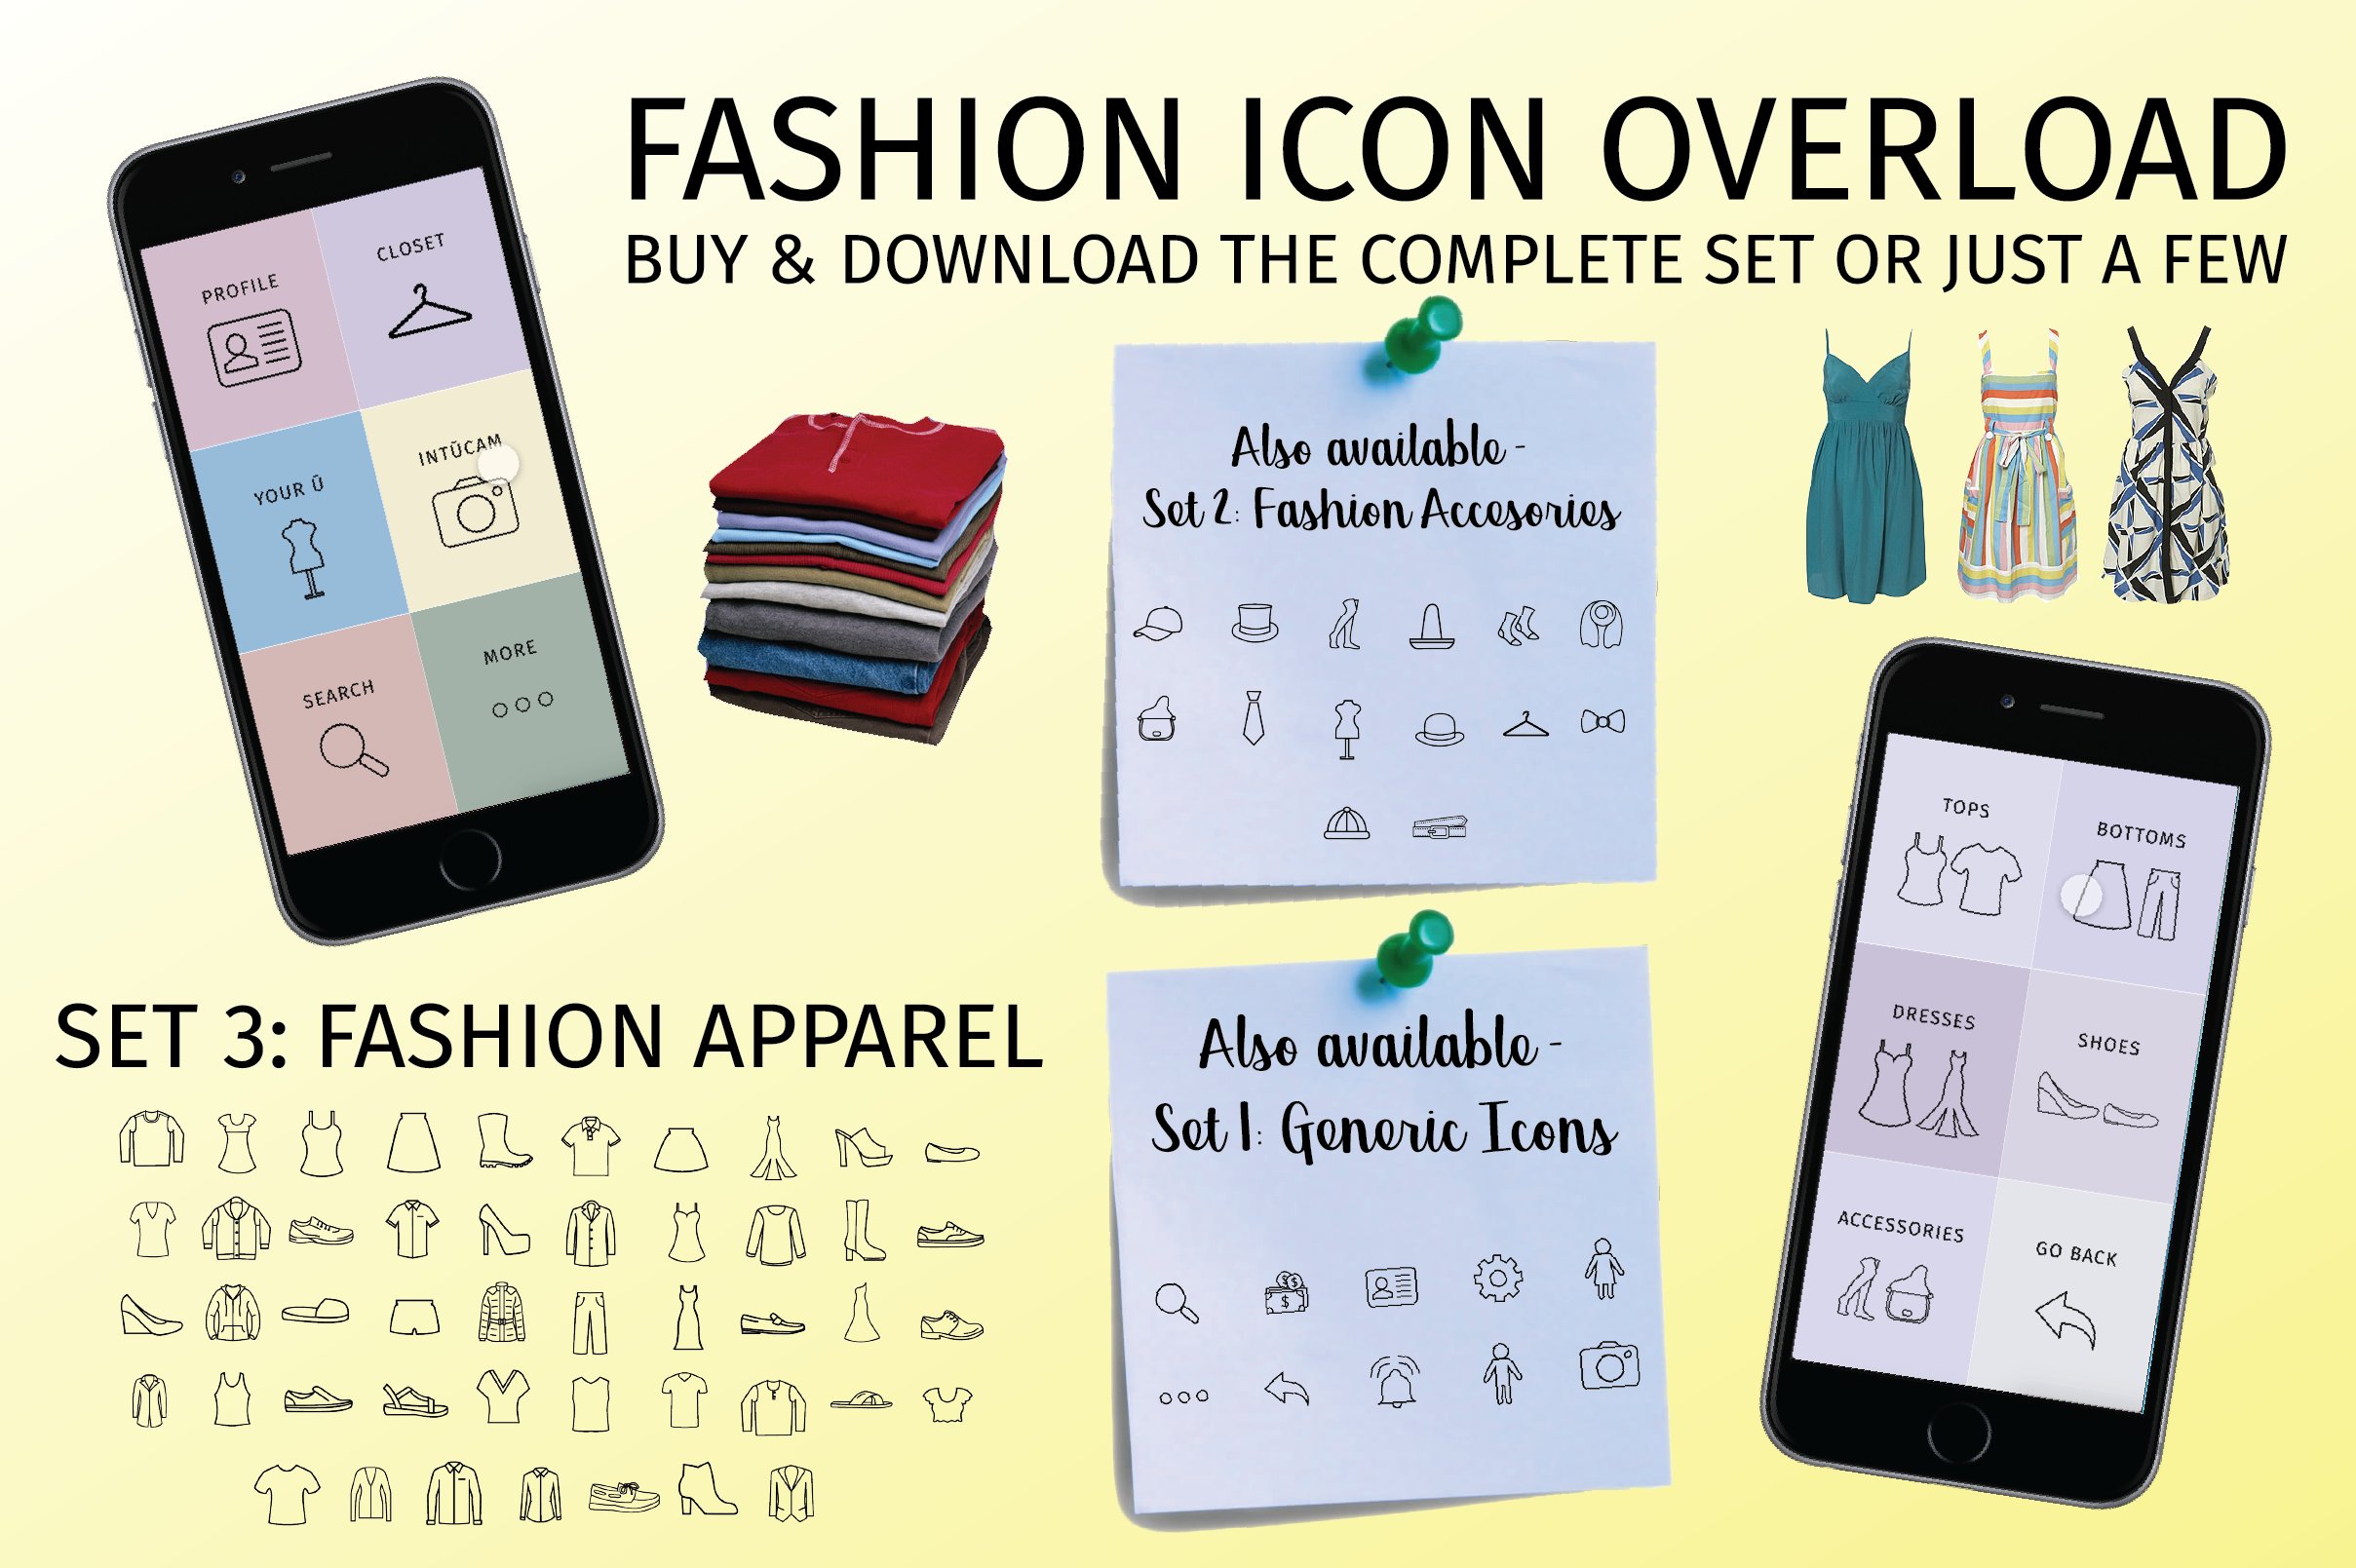 Fashion Icon Overload | Set 3 cover image.